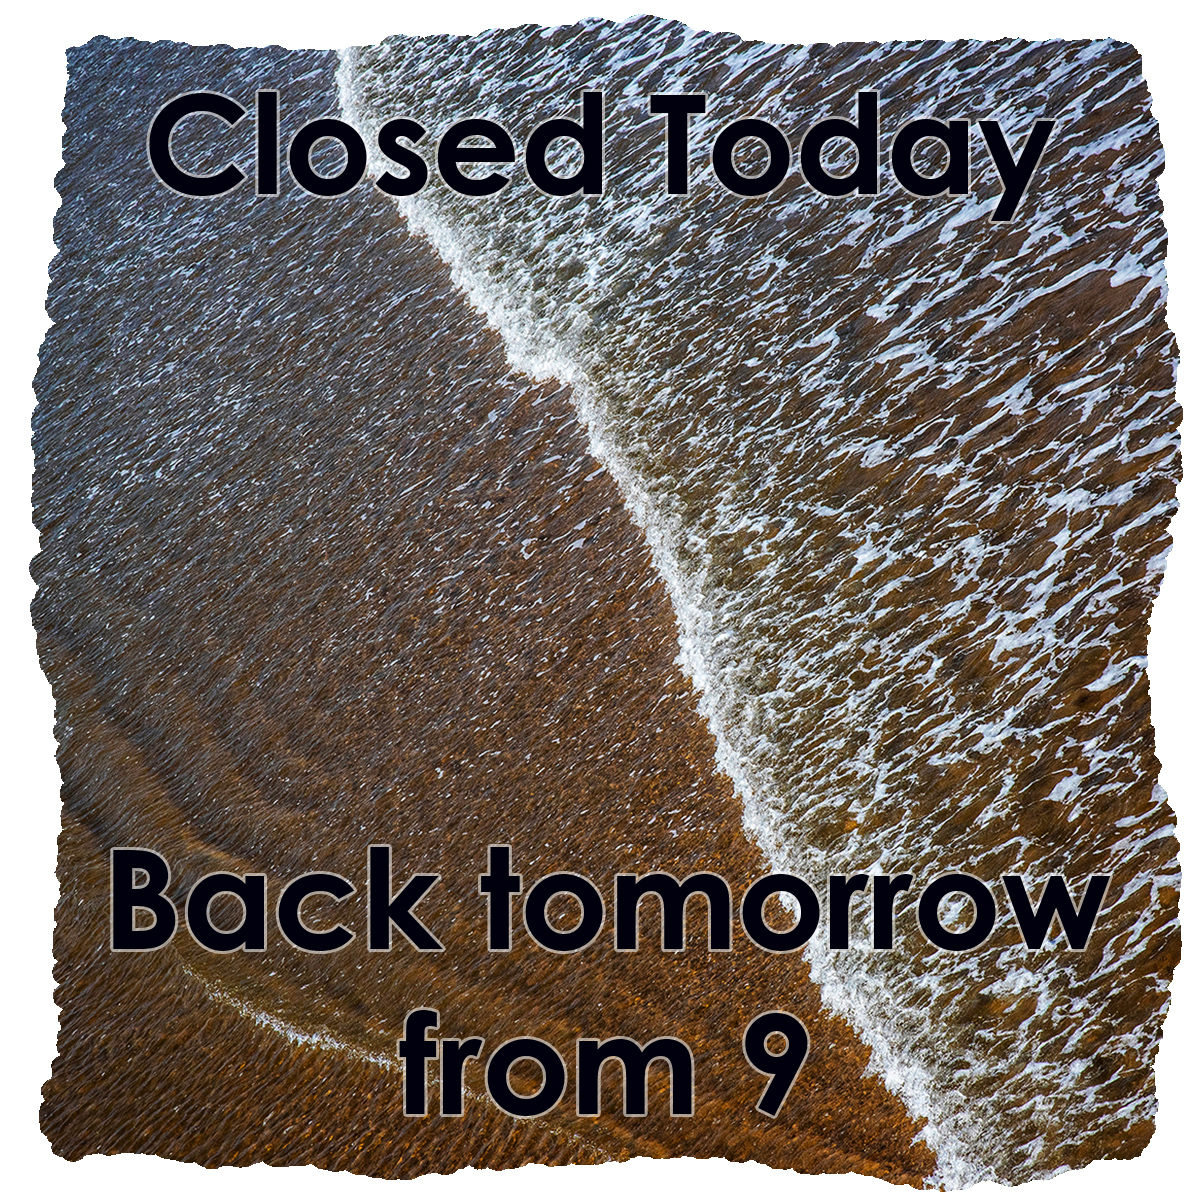 #closed #midweek #backtomorrow #keepitlocal #30years #smallbusiness #consett #thephotoshopconsett #markwilkinsonphotography